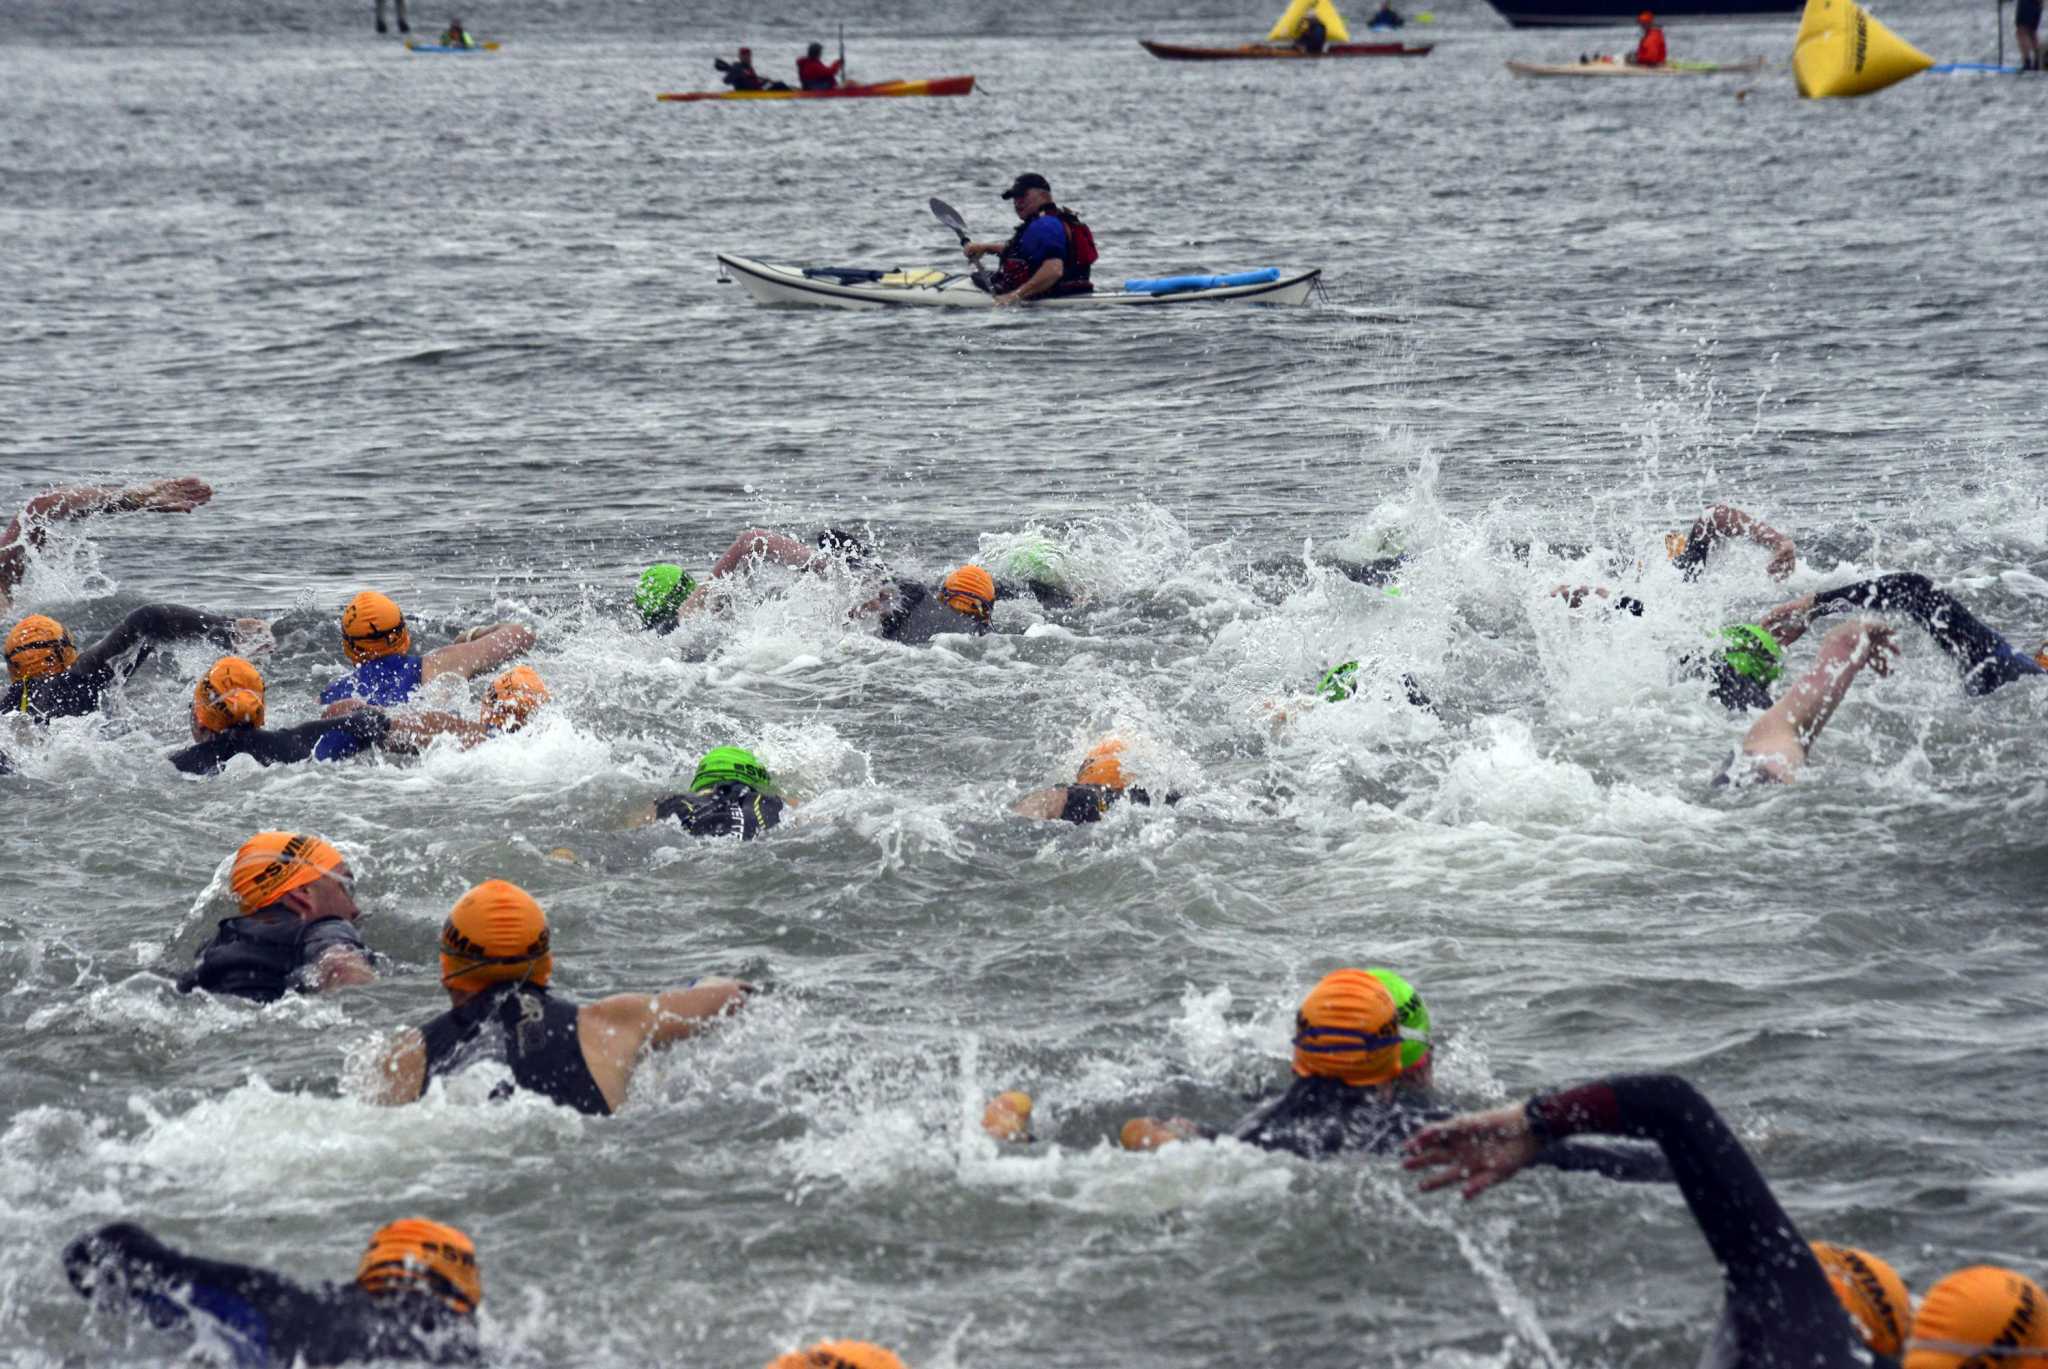 Swim Across America Prepares To Make A Big Splash In The Fight Against Cancer In Greenwichstamford